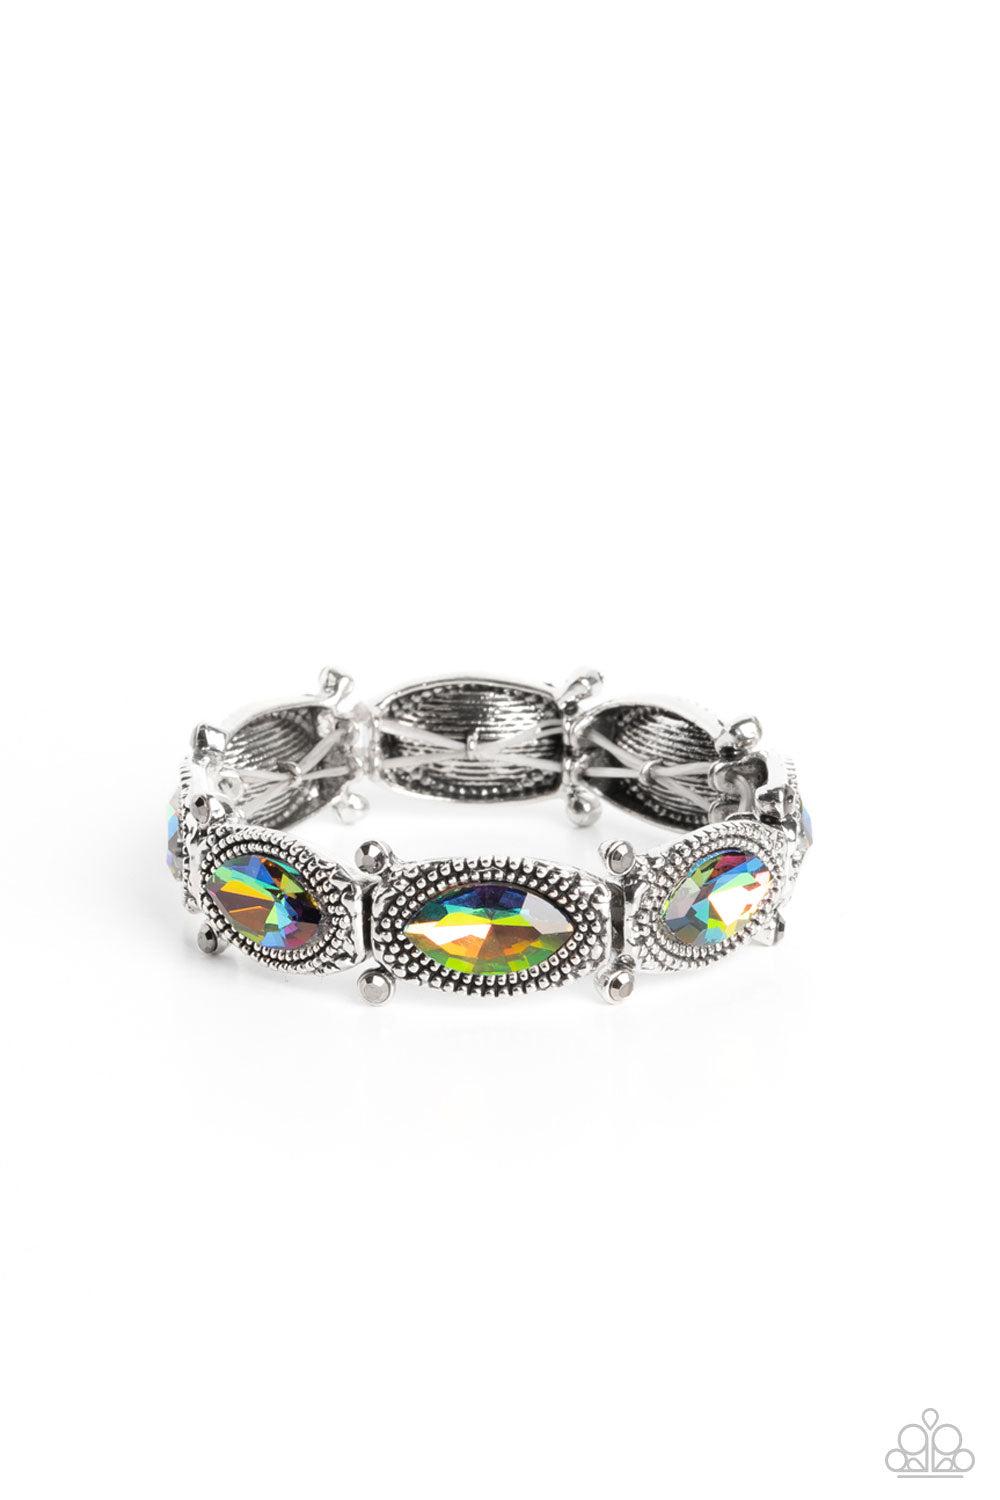 Dancing Diva Multi Oil Spill Rhinestone Bracelet - Paparazzi Accessories- lightbox - CarasShop.com - $5 Jewelry by Cara Jewels